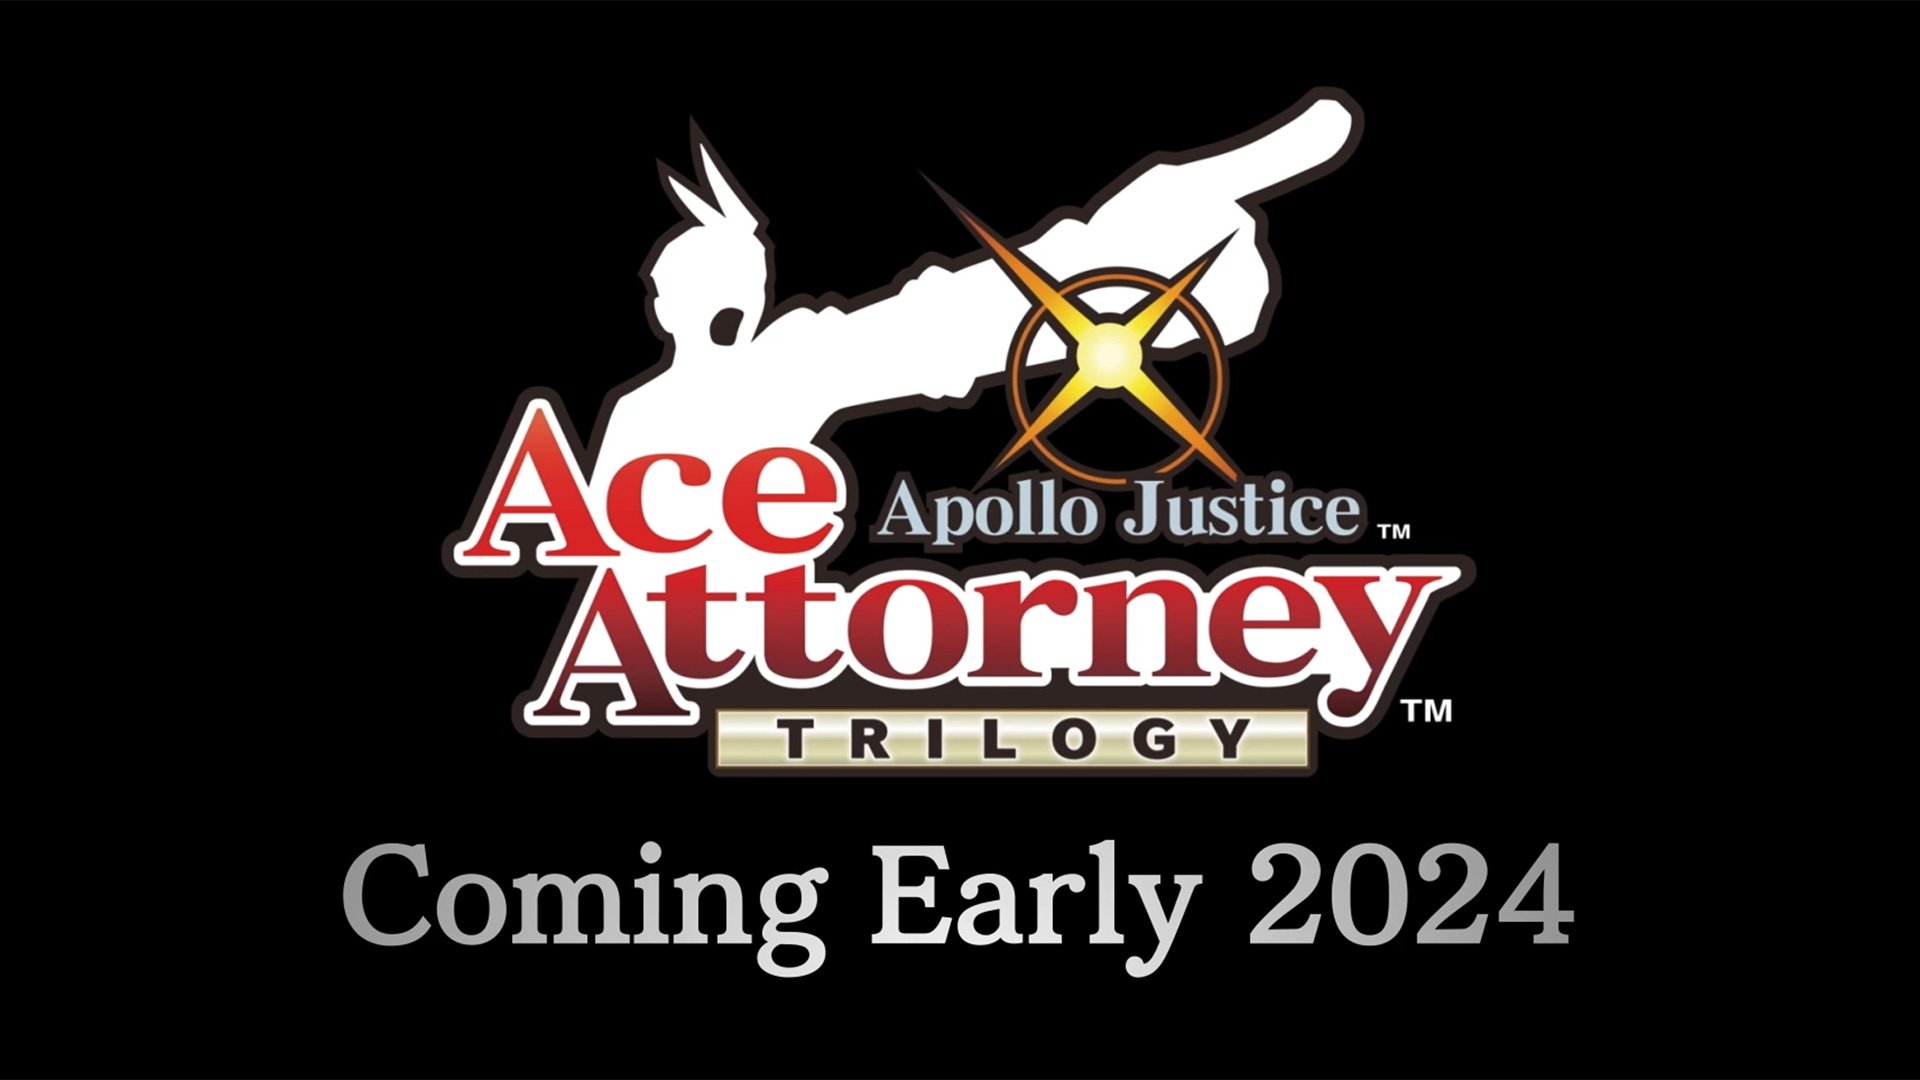 Phoenix Wright: Ace Attorney Trilogy - Announce Trailer 